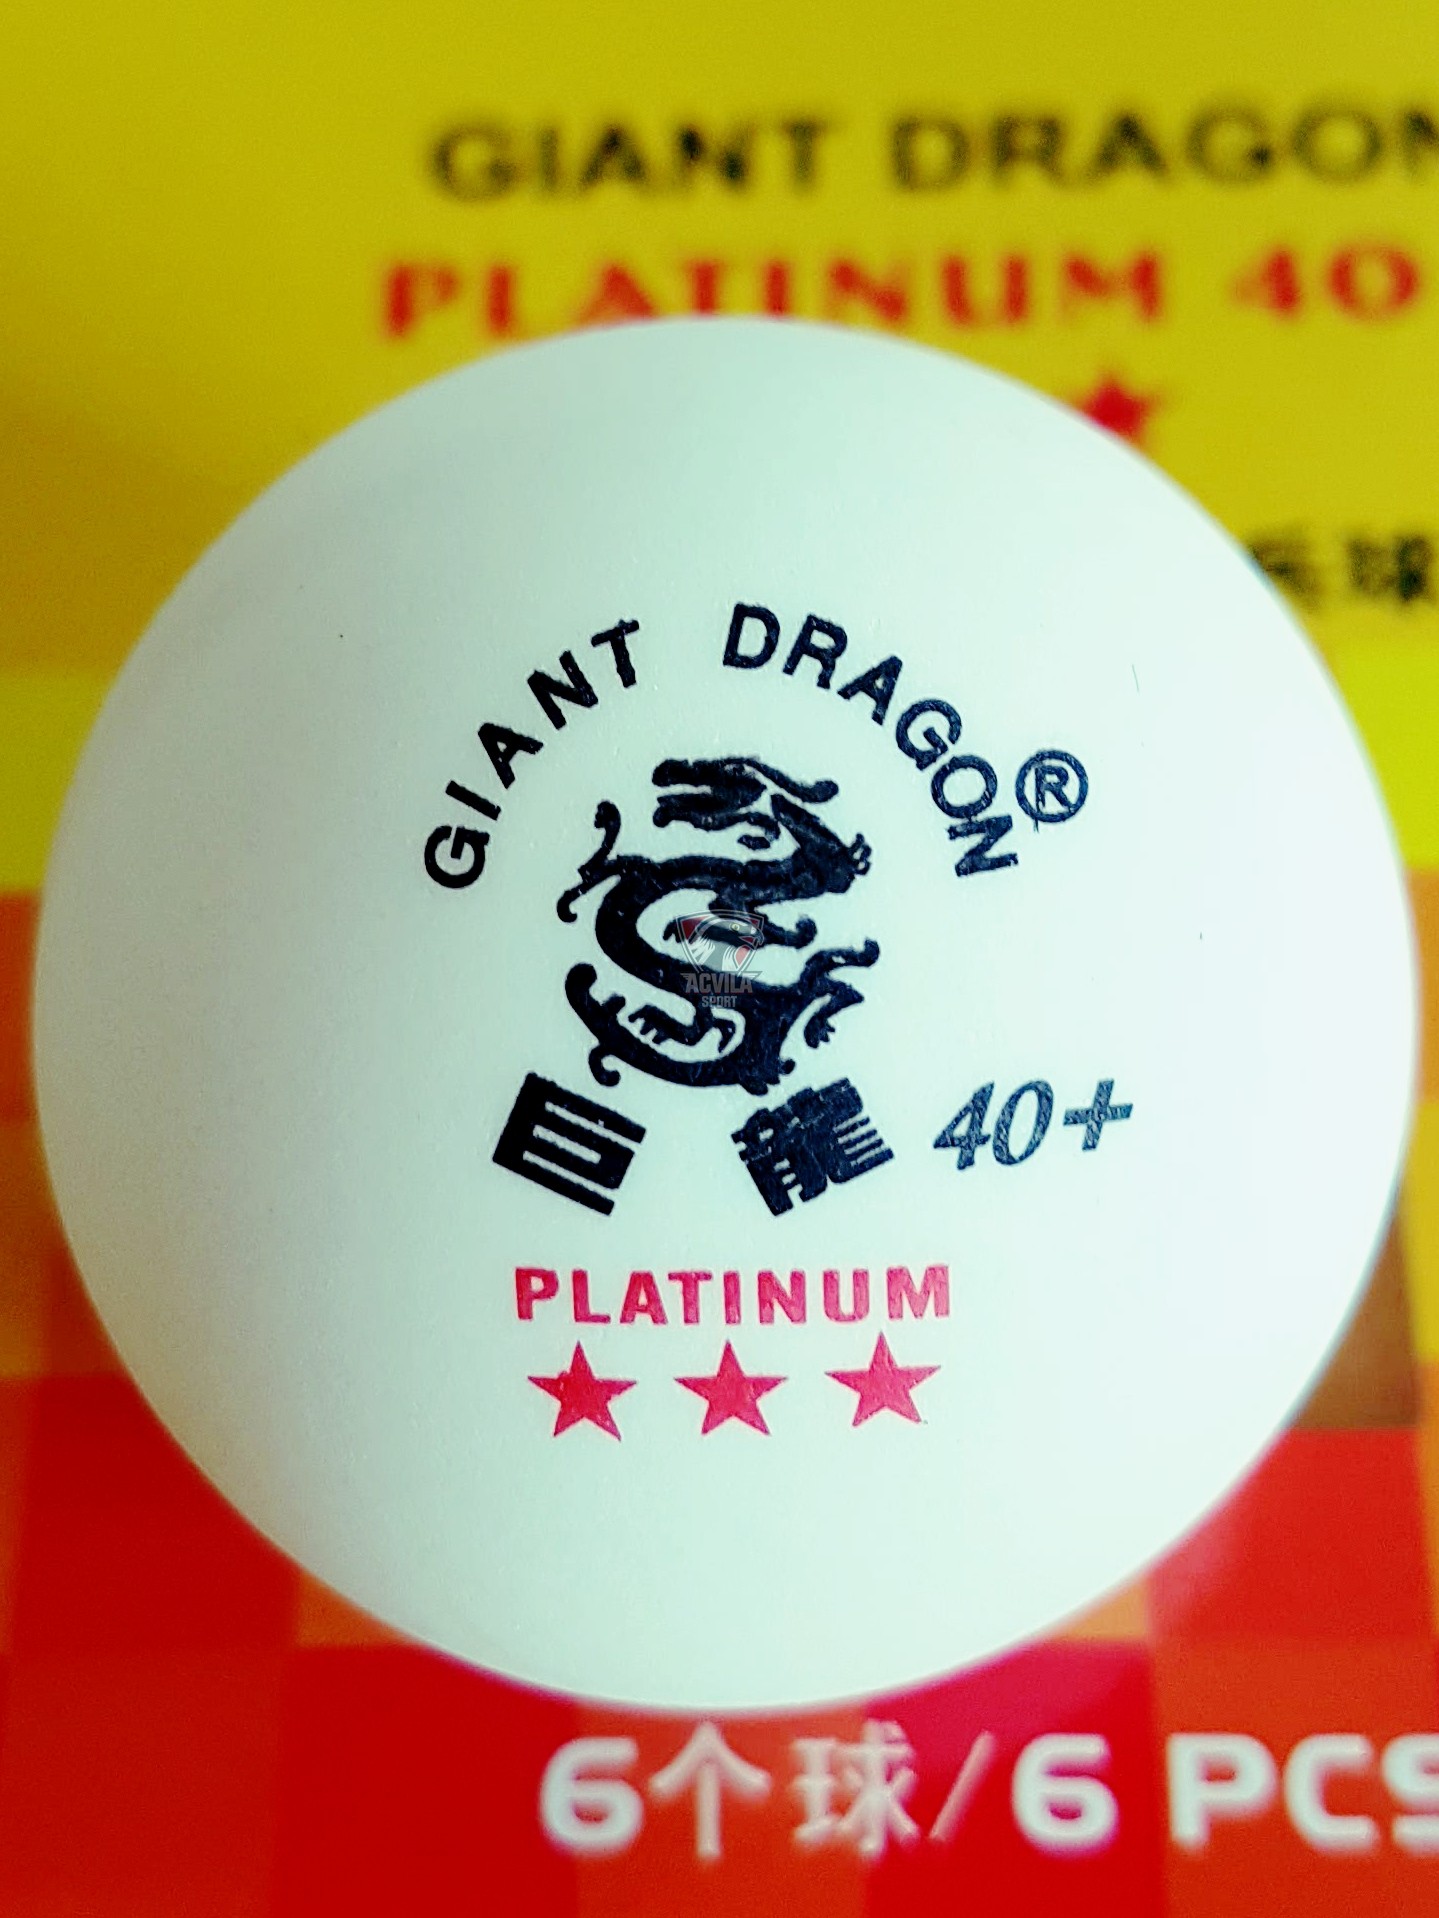 photo 0 Мяч для настольного тенниса Giant Dragon Platinum 40+ 3 звезды